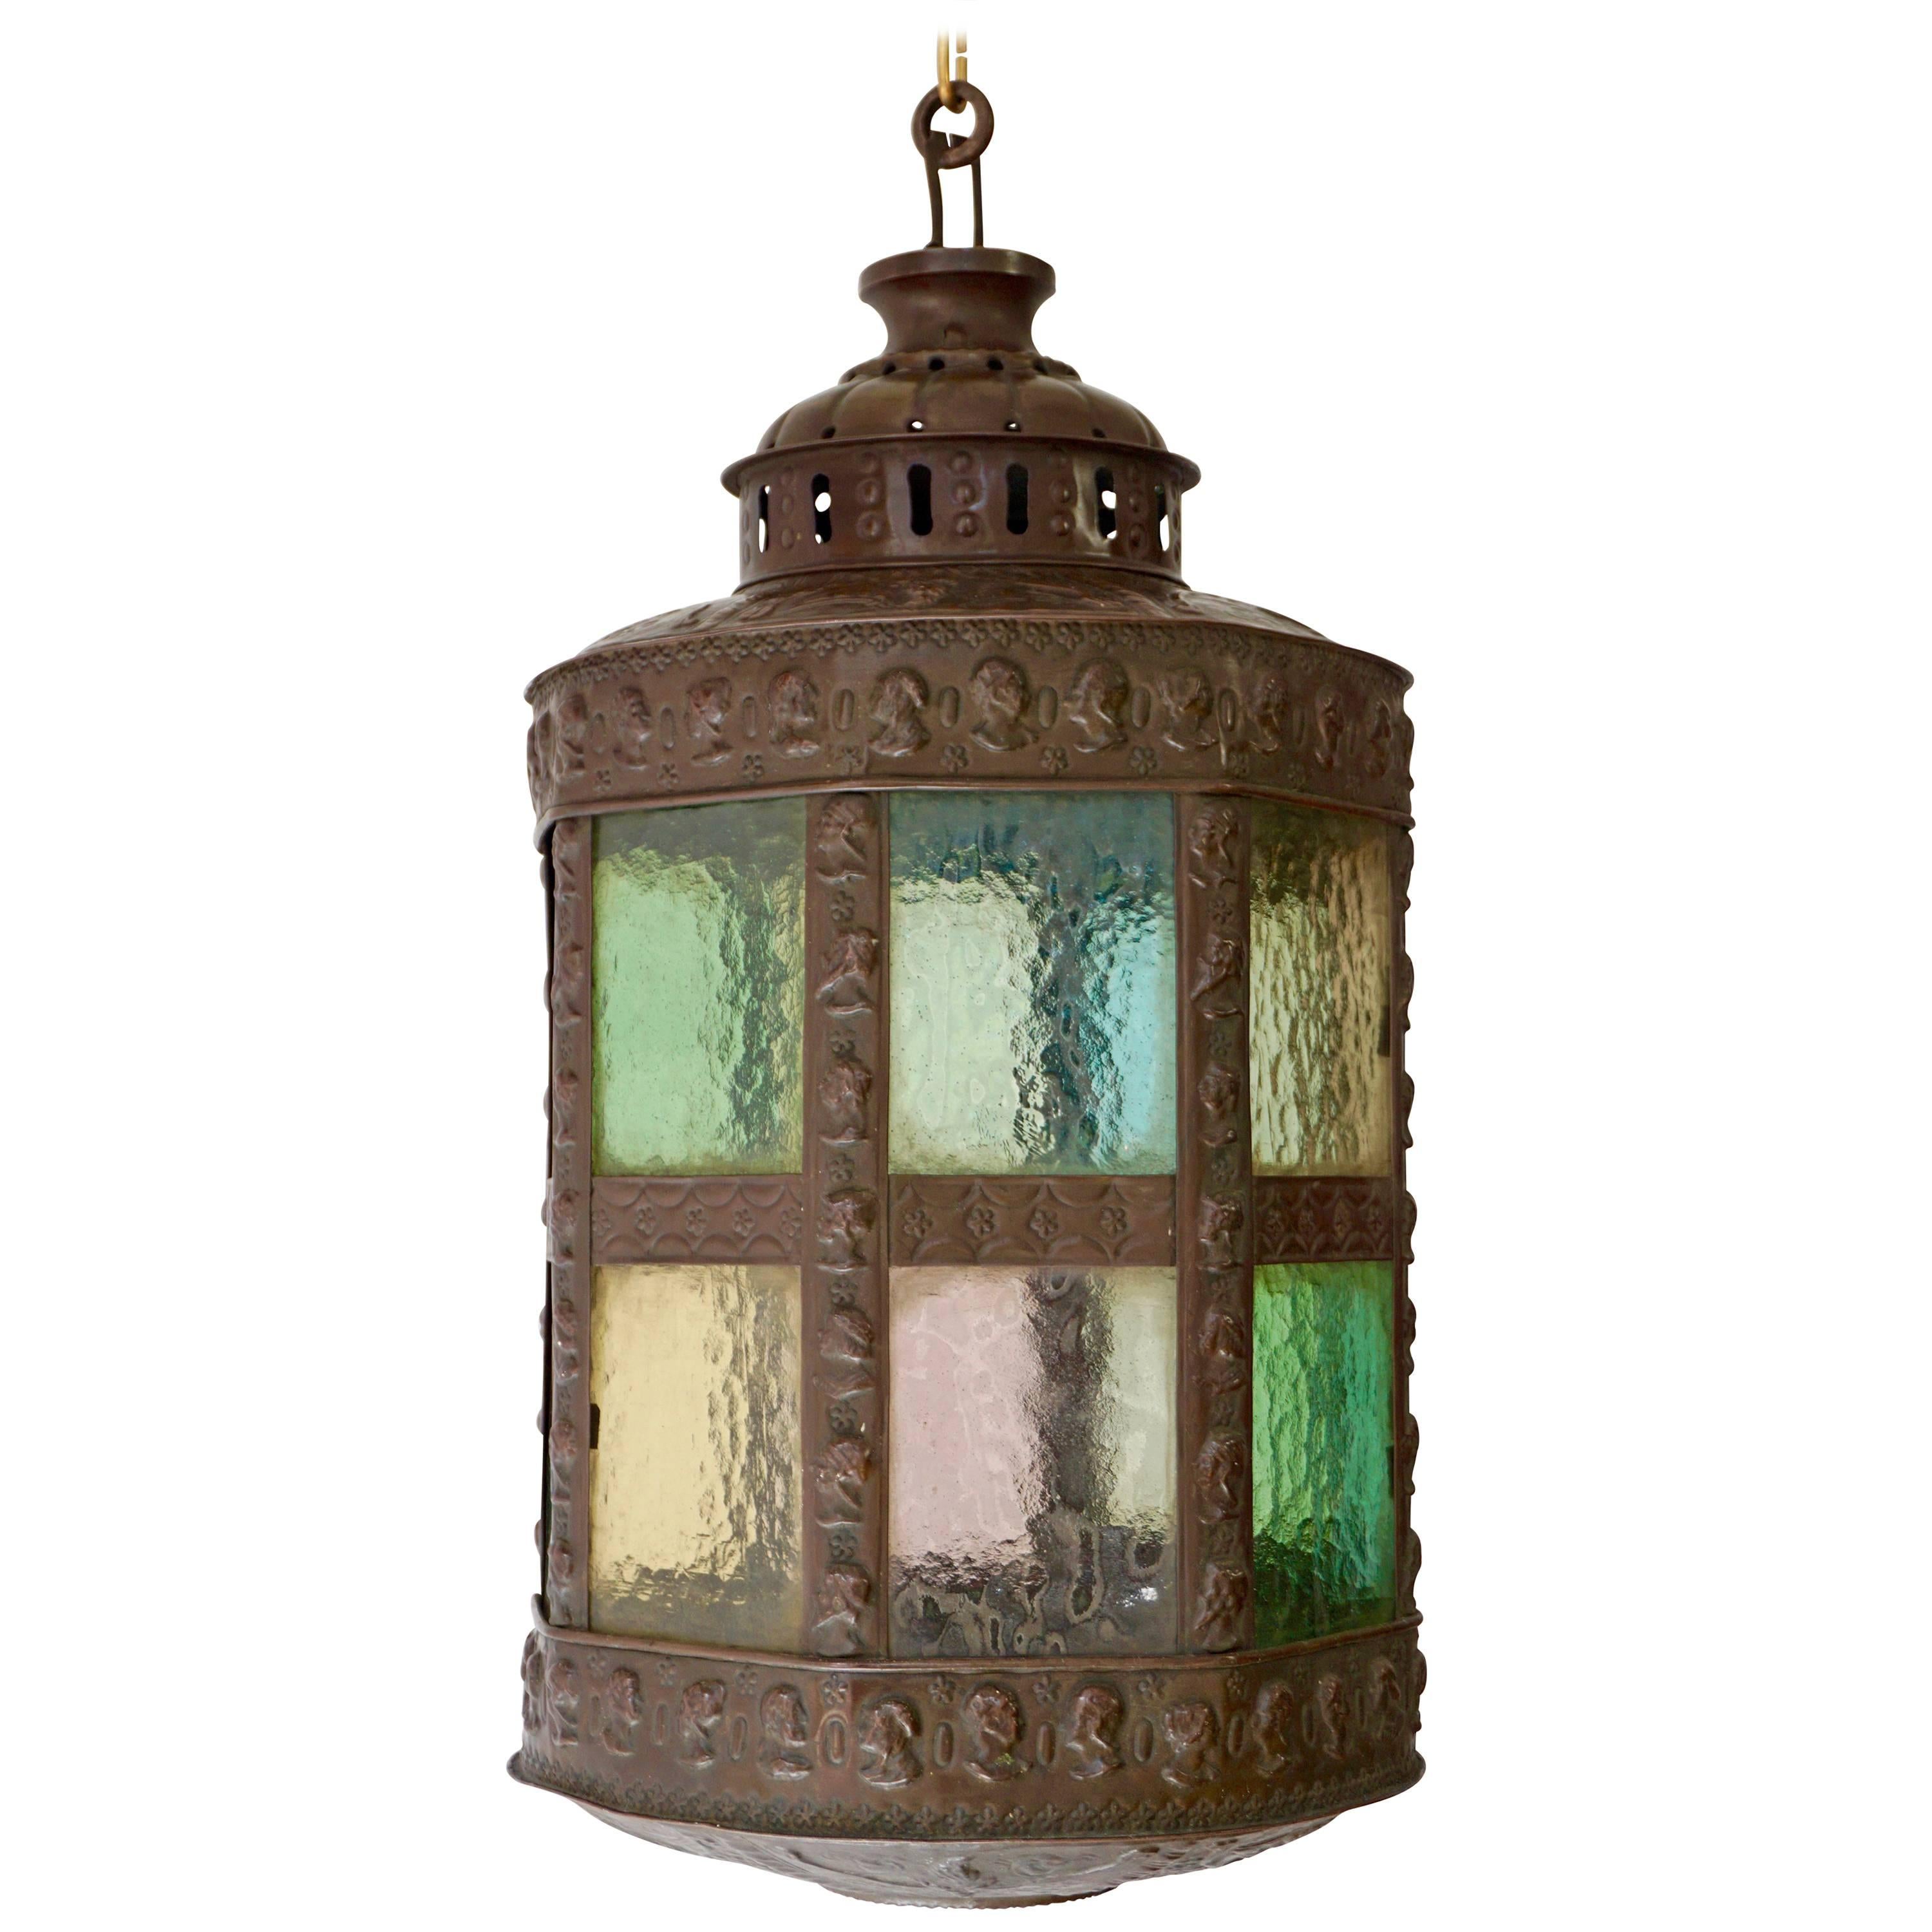  Copper Lantern - 18th Century